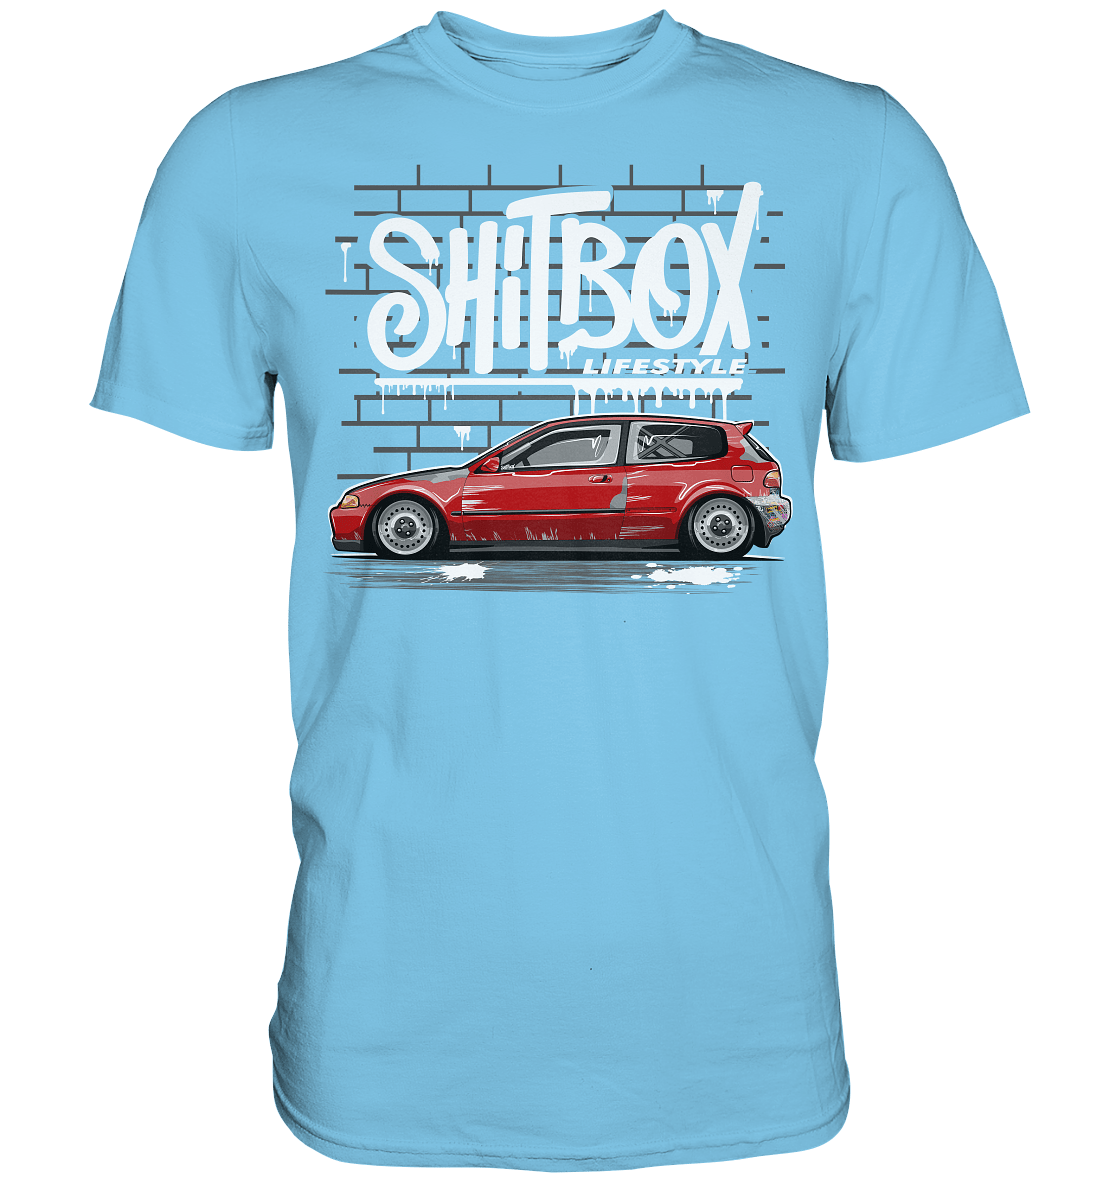 Shitbox Lifestyle Civic EG - Premium Shirt - MotoMerch.de